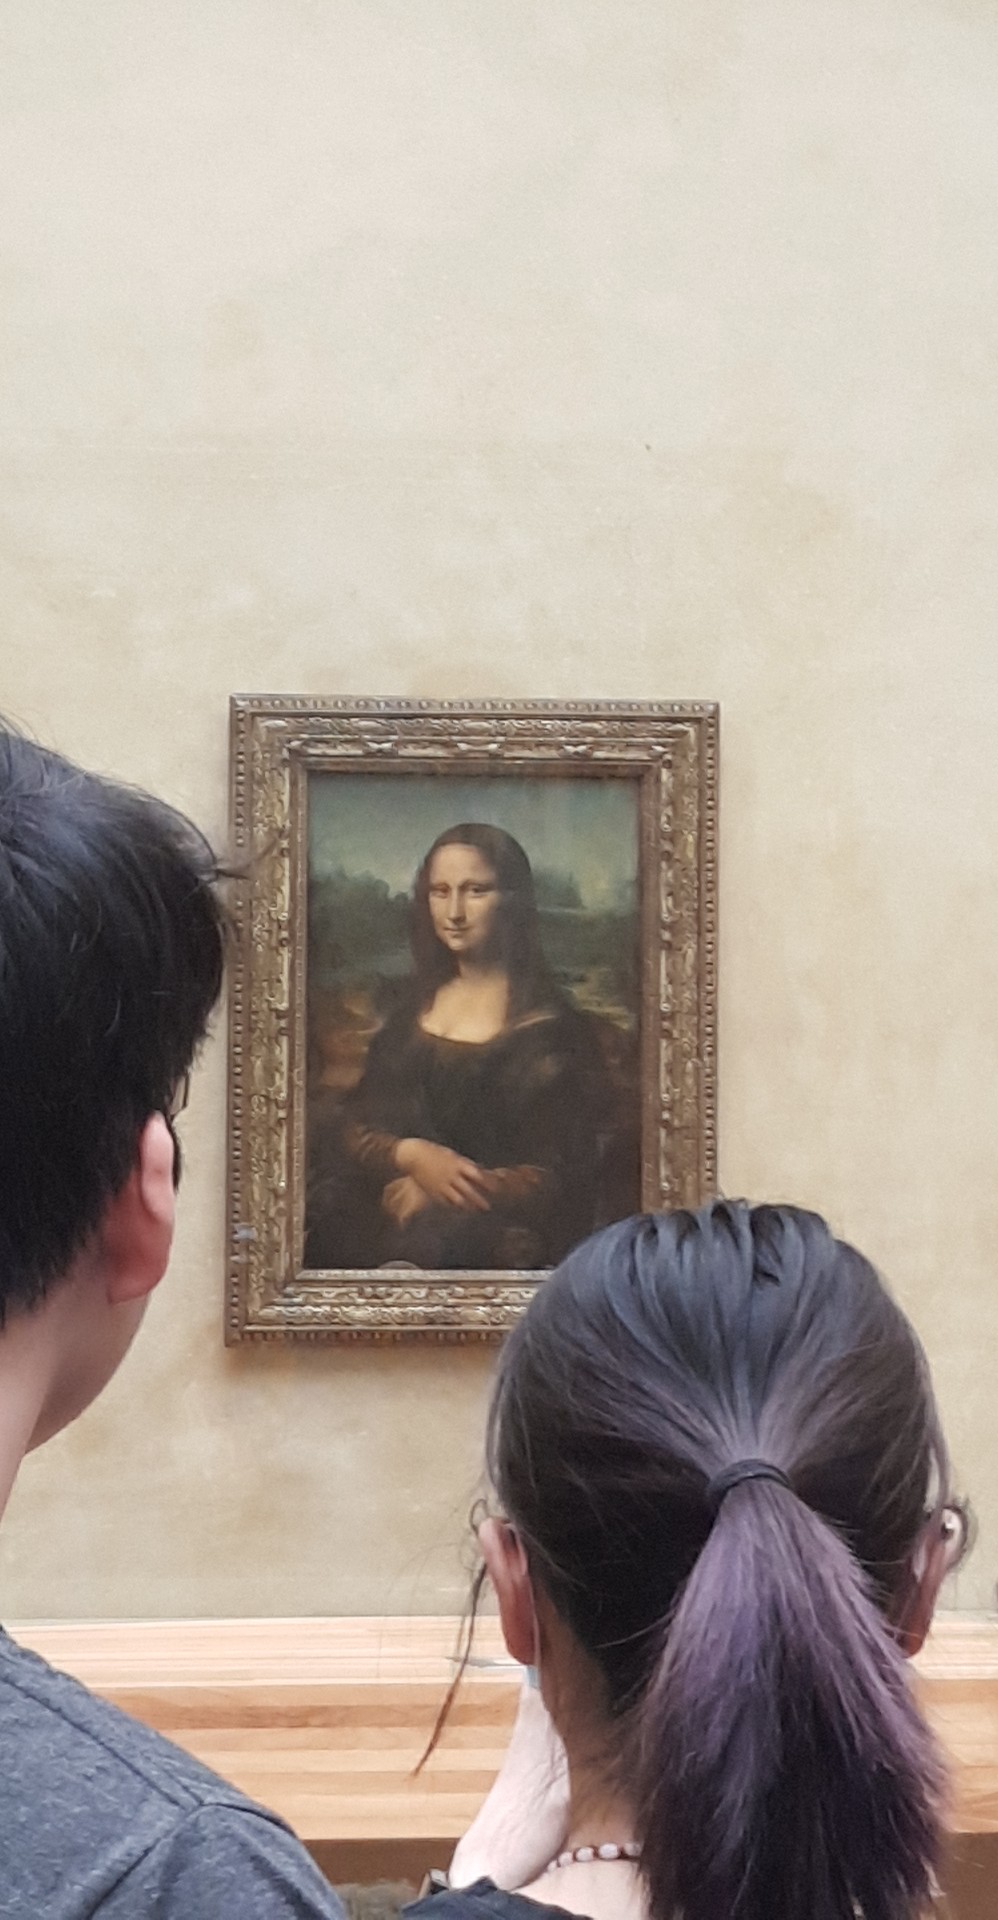 Mona lisa snapchat